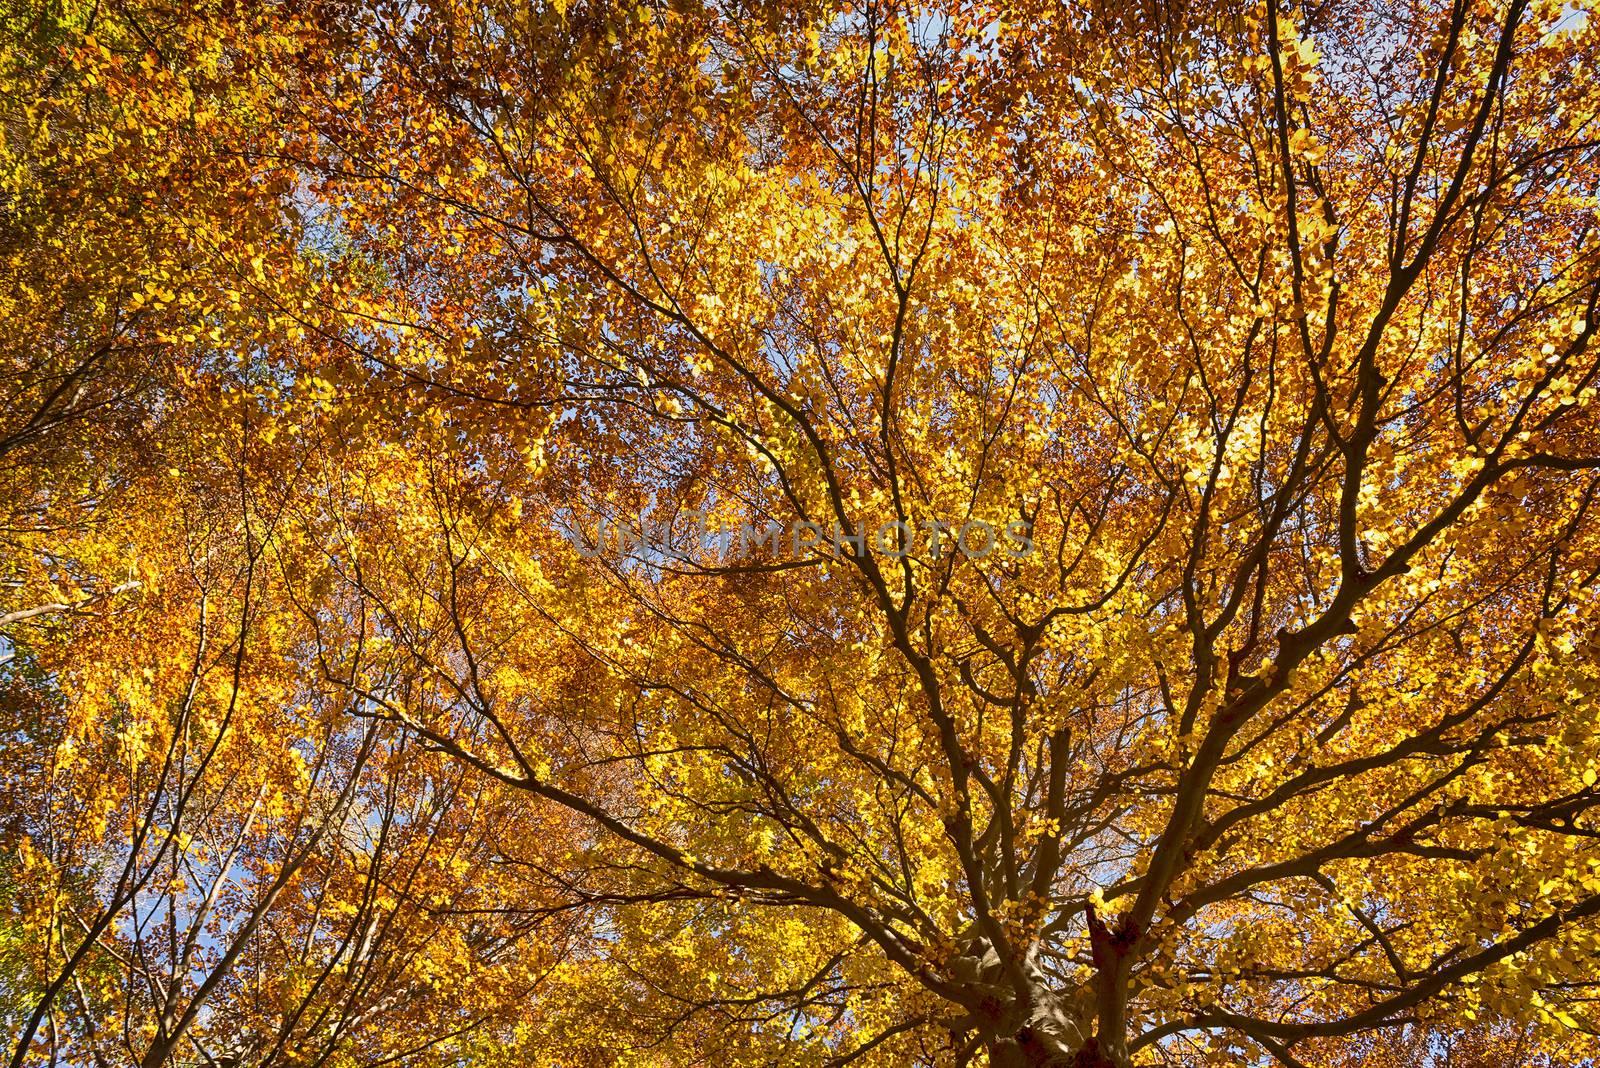 The Trees, autumn season by Mdc1970